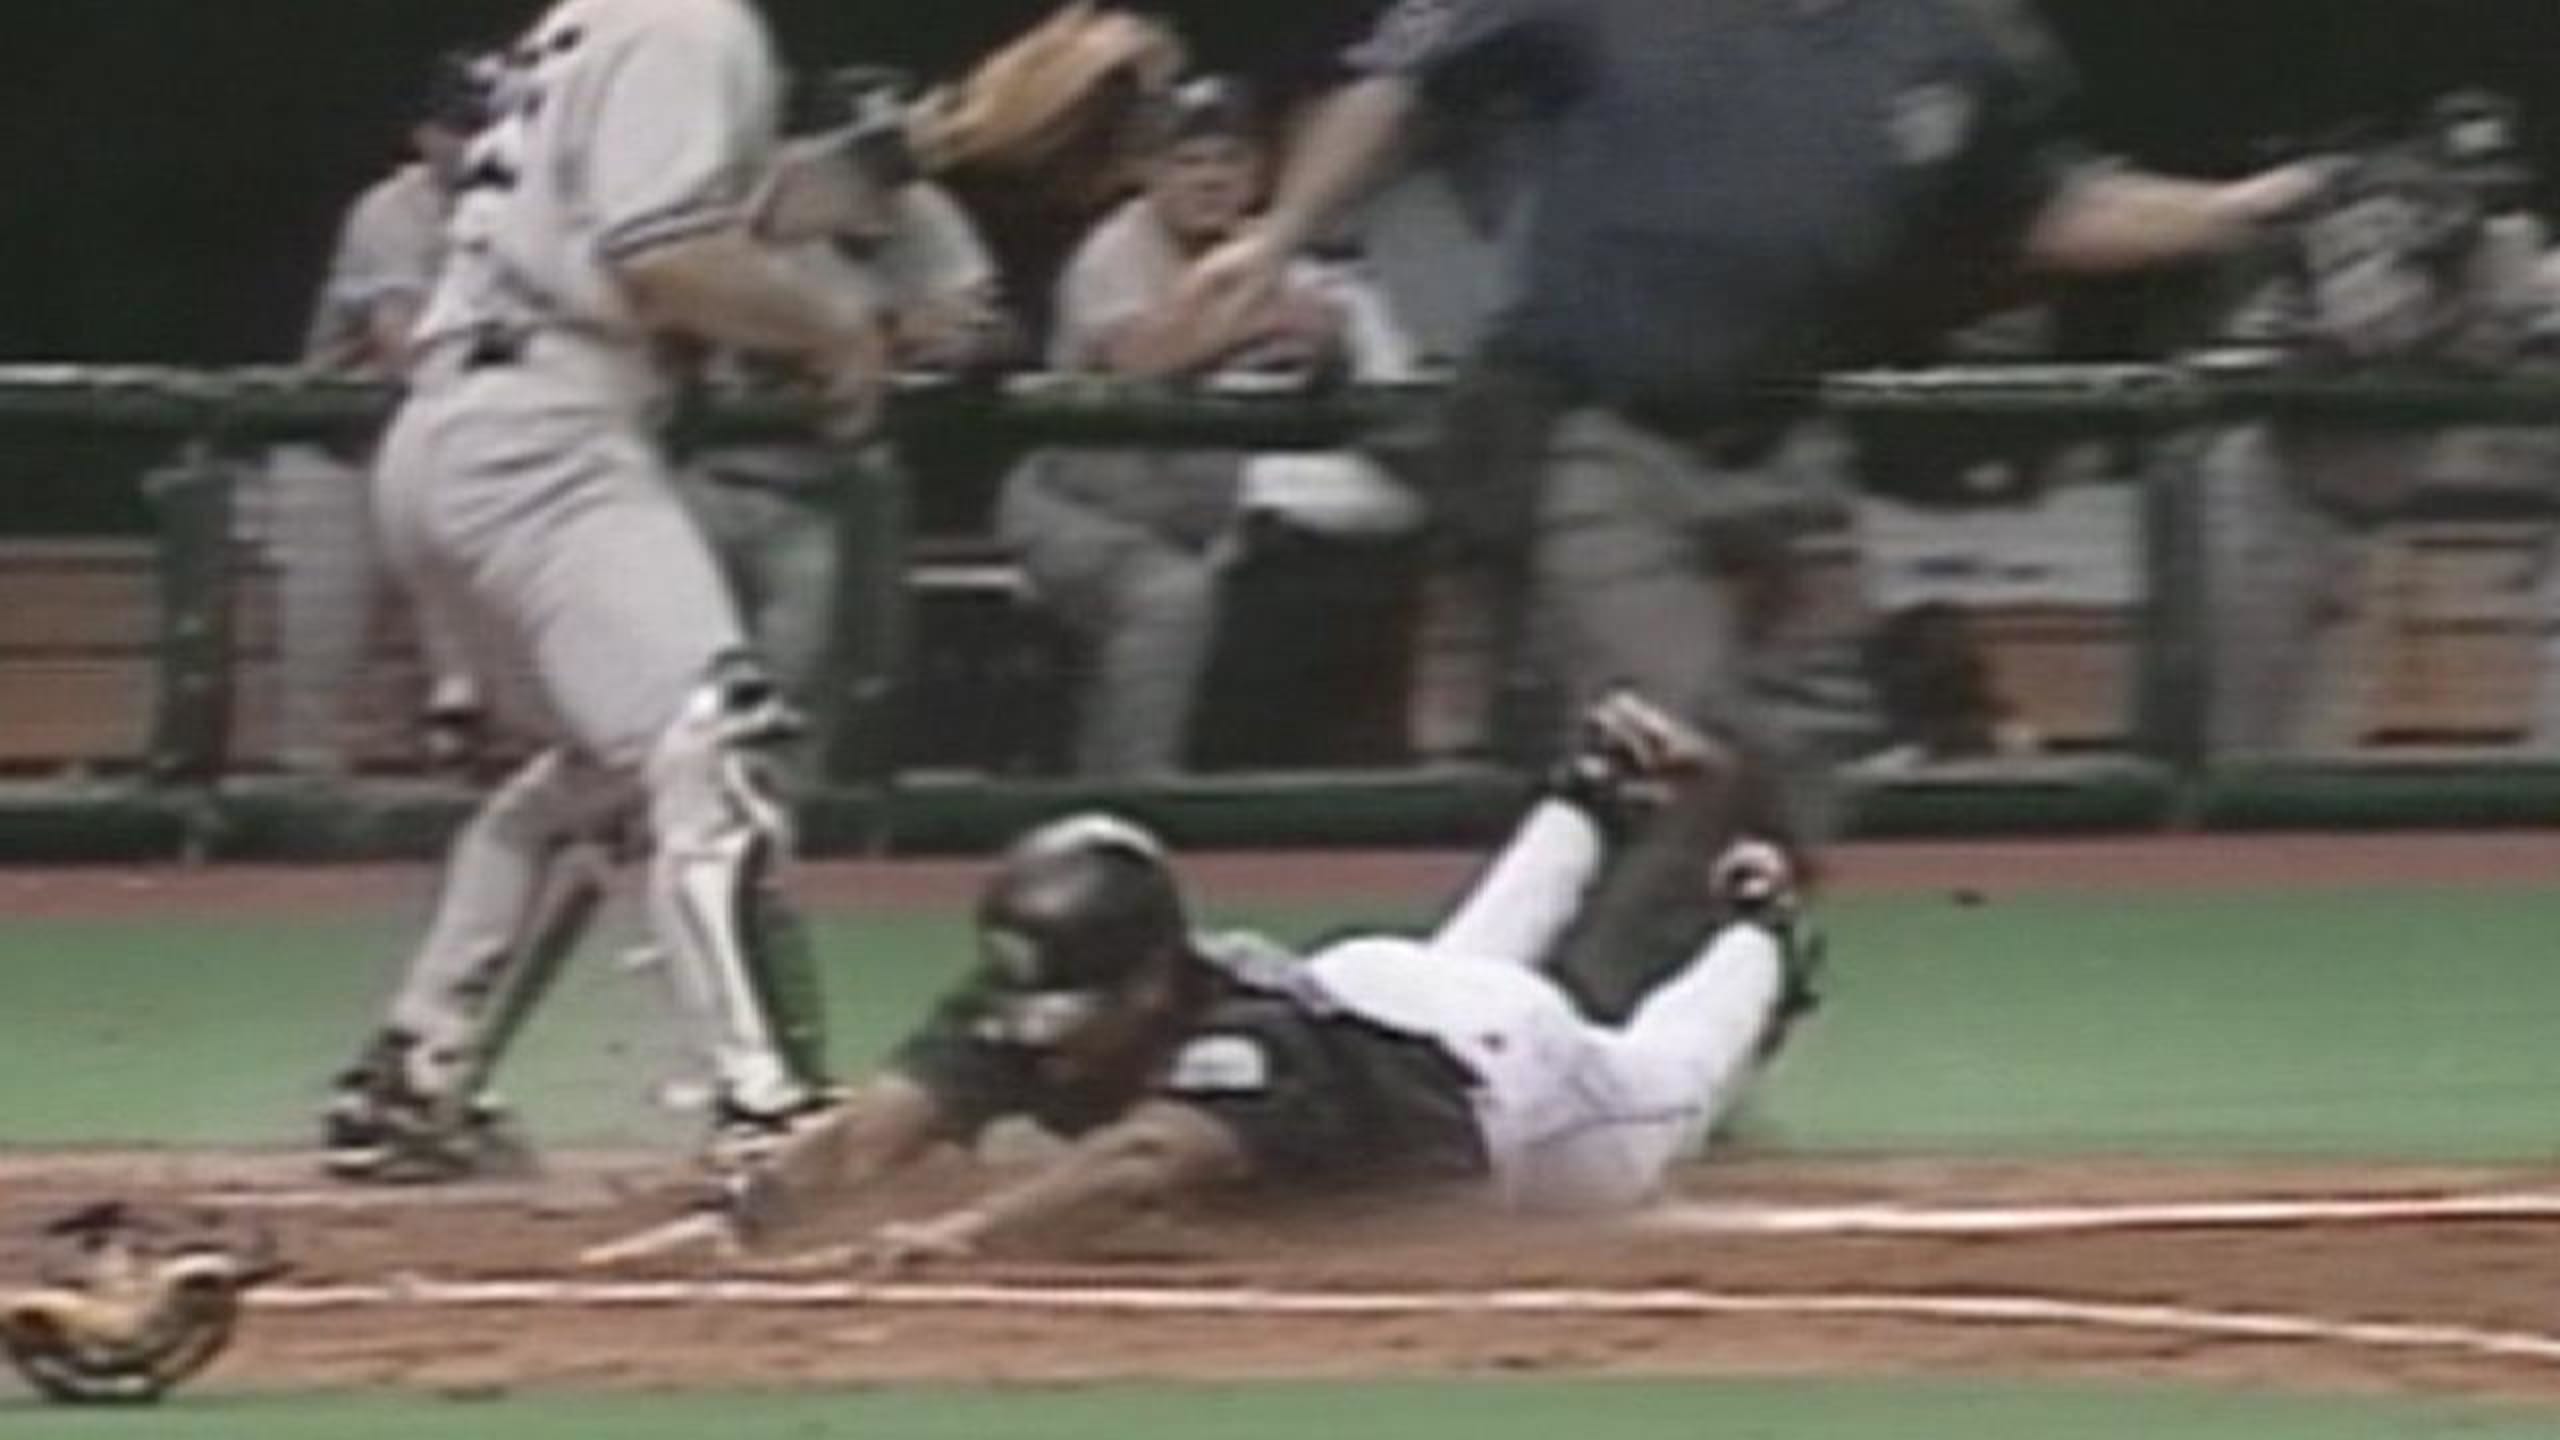 1998 Yankees Diary: New York blasts past sloppy Devil Rays